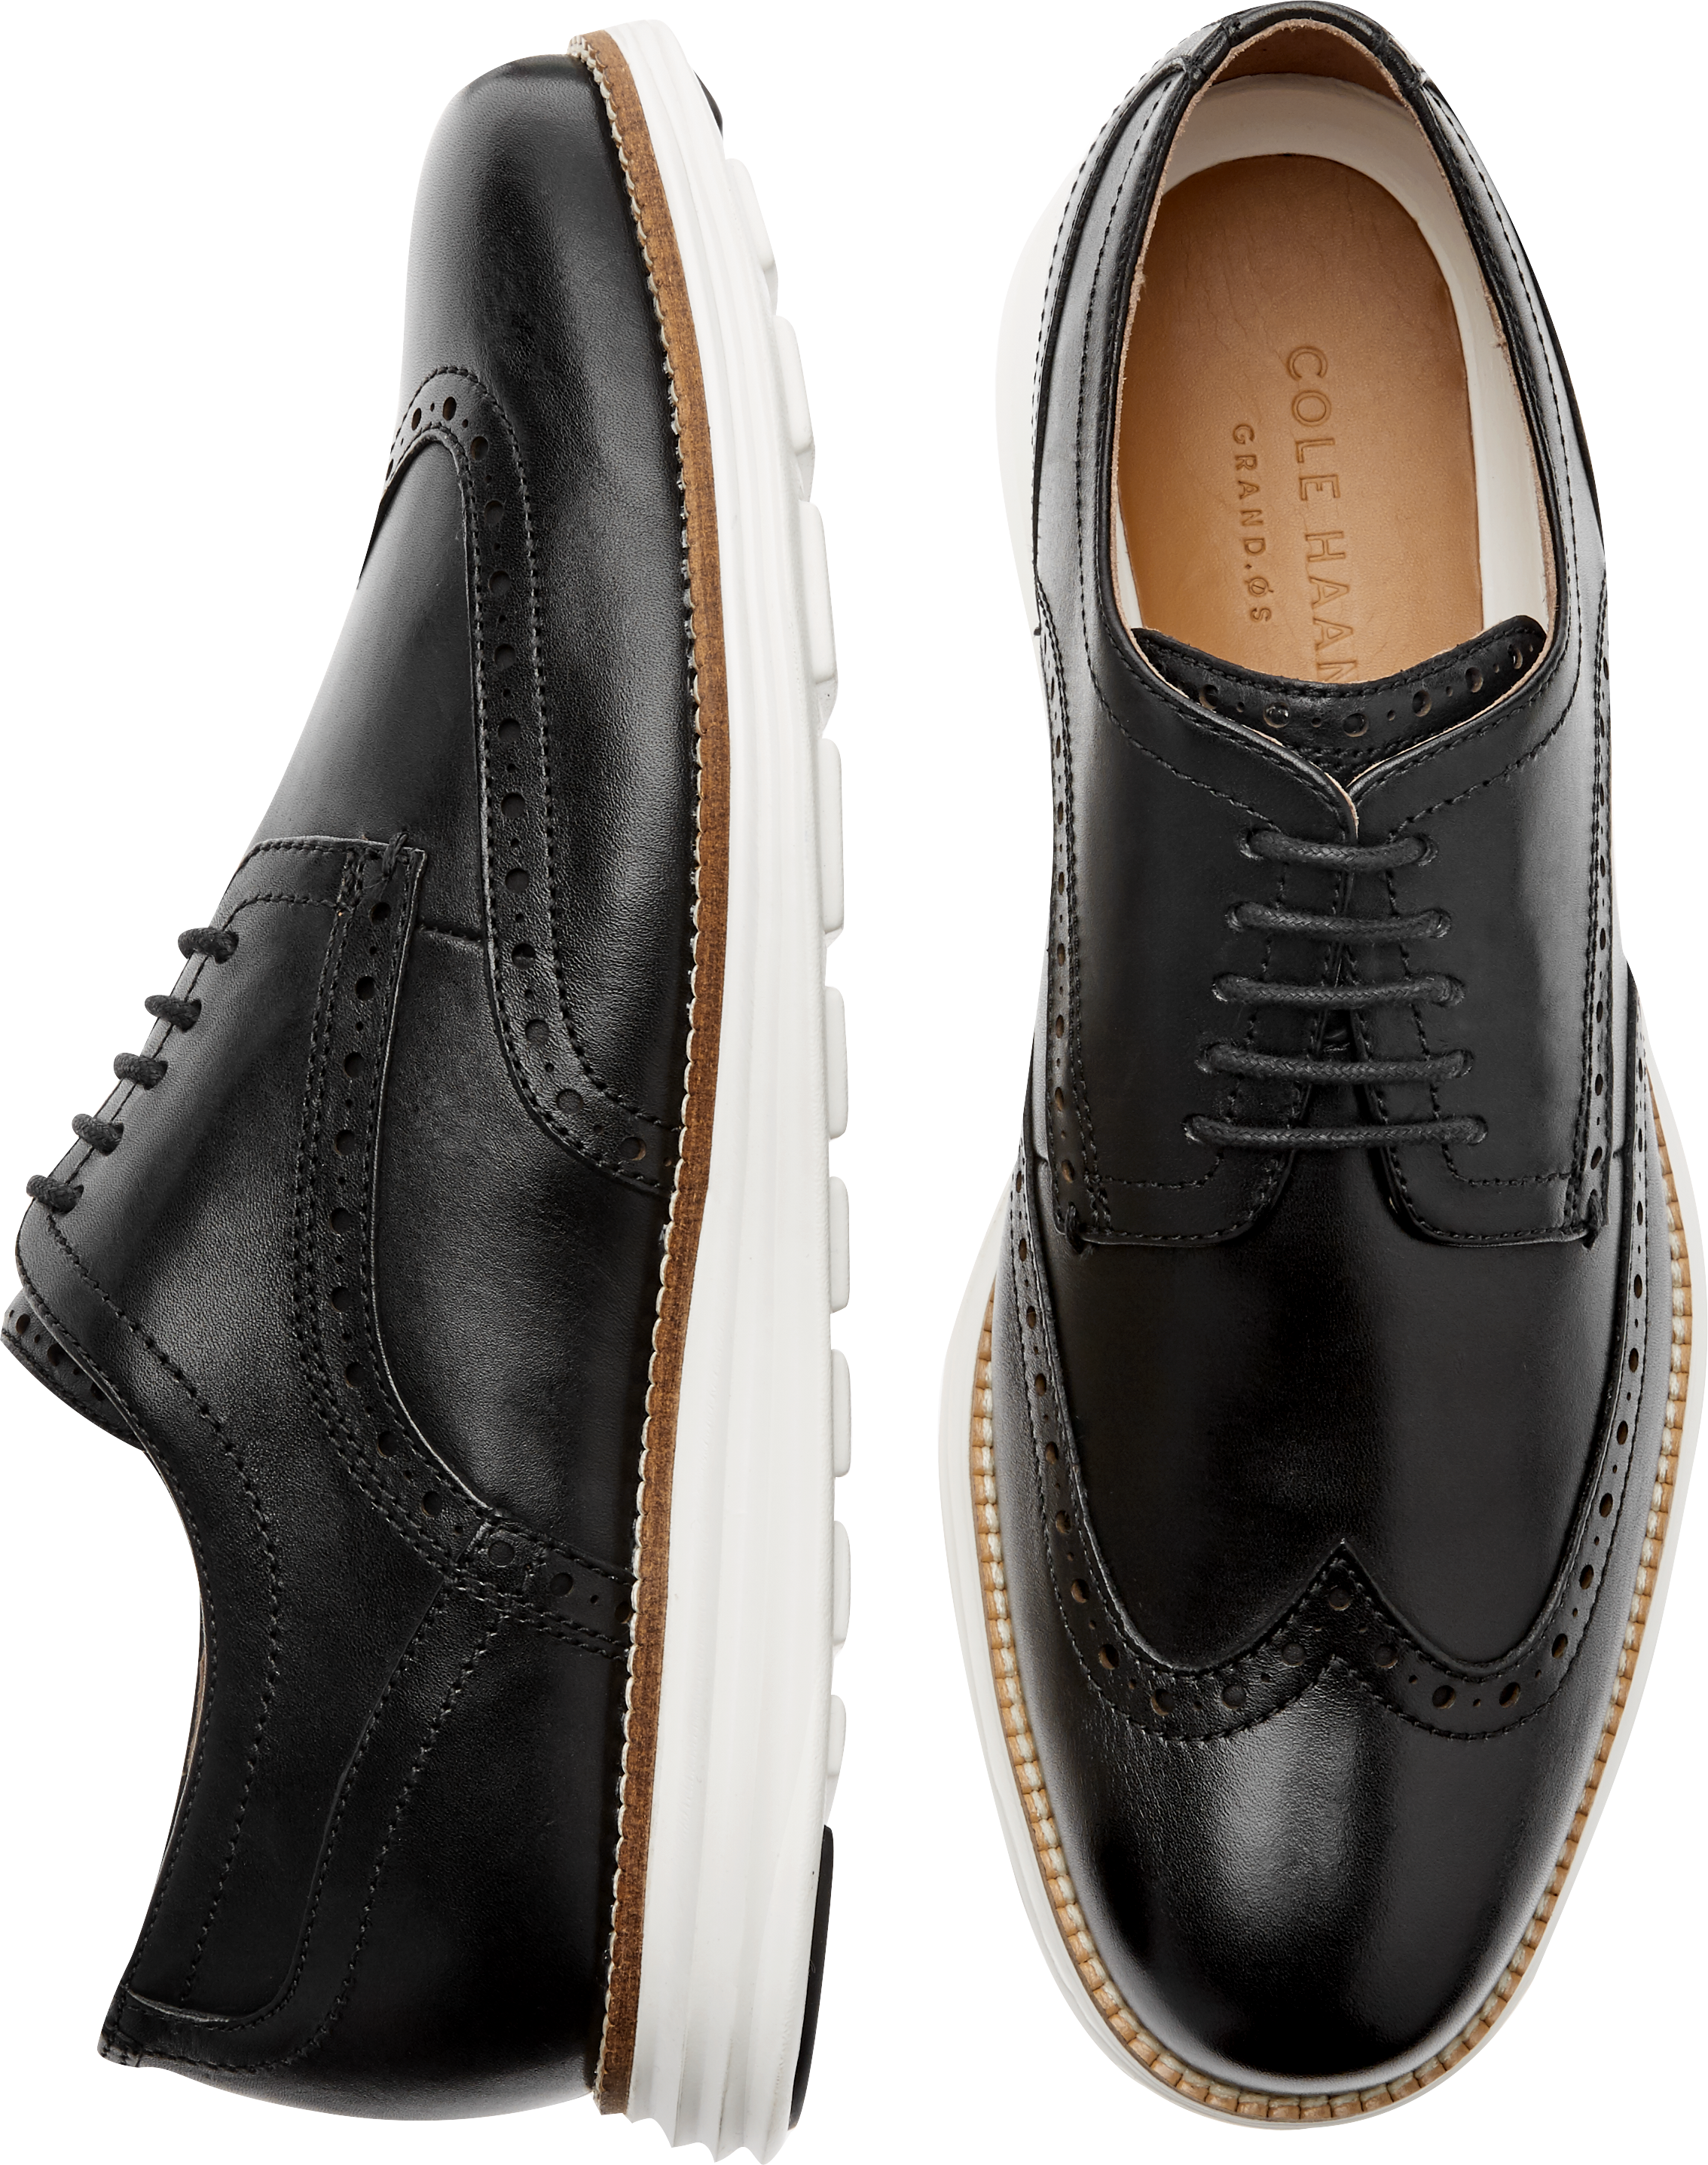 Cole Haan Original Grand Wingtip Oxfords, Black - Men's Shoes | Men's  Wearhouse